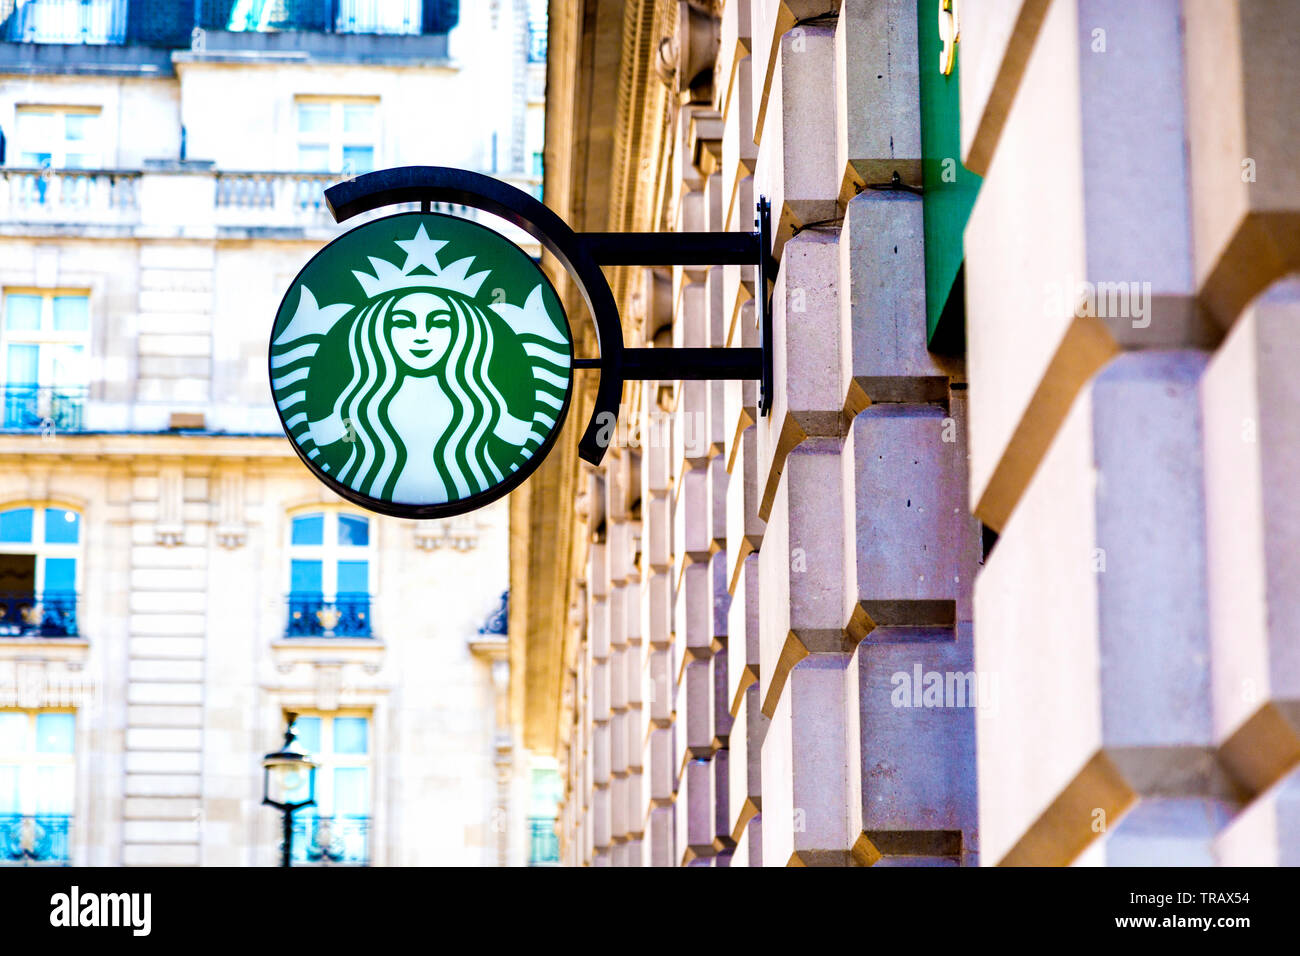 Starbucks logo on the facade of a building (Green Park, London, UK) Stock Photo